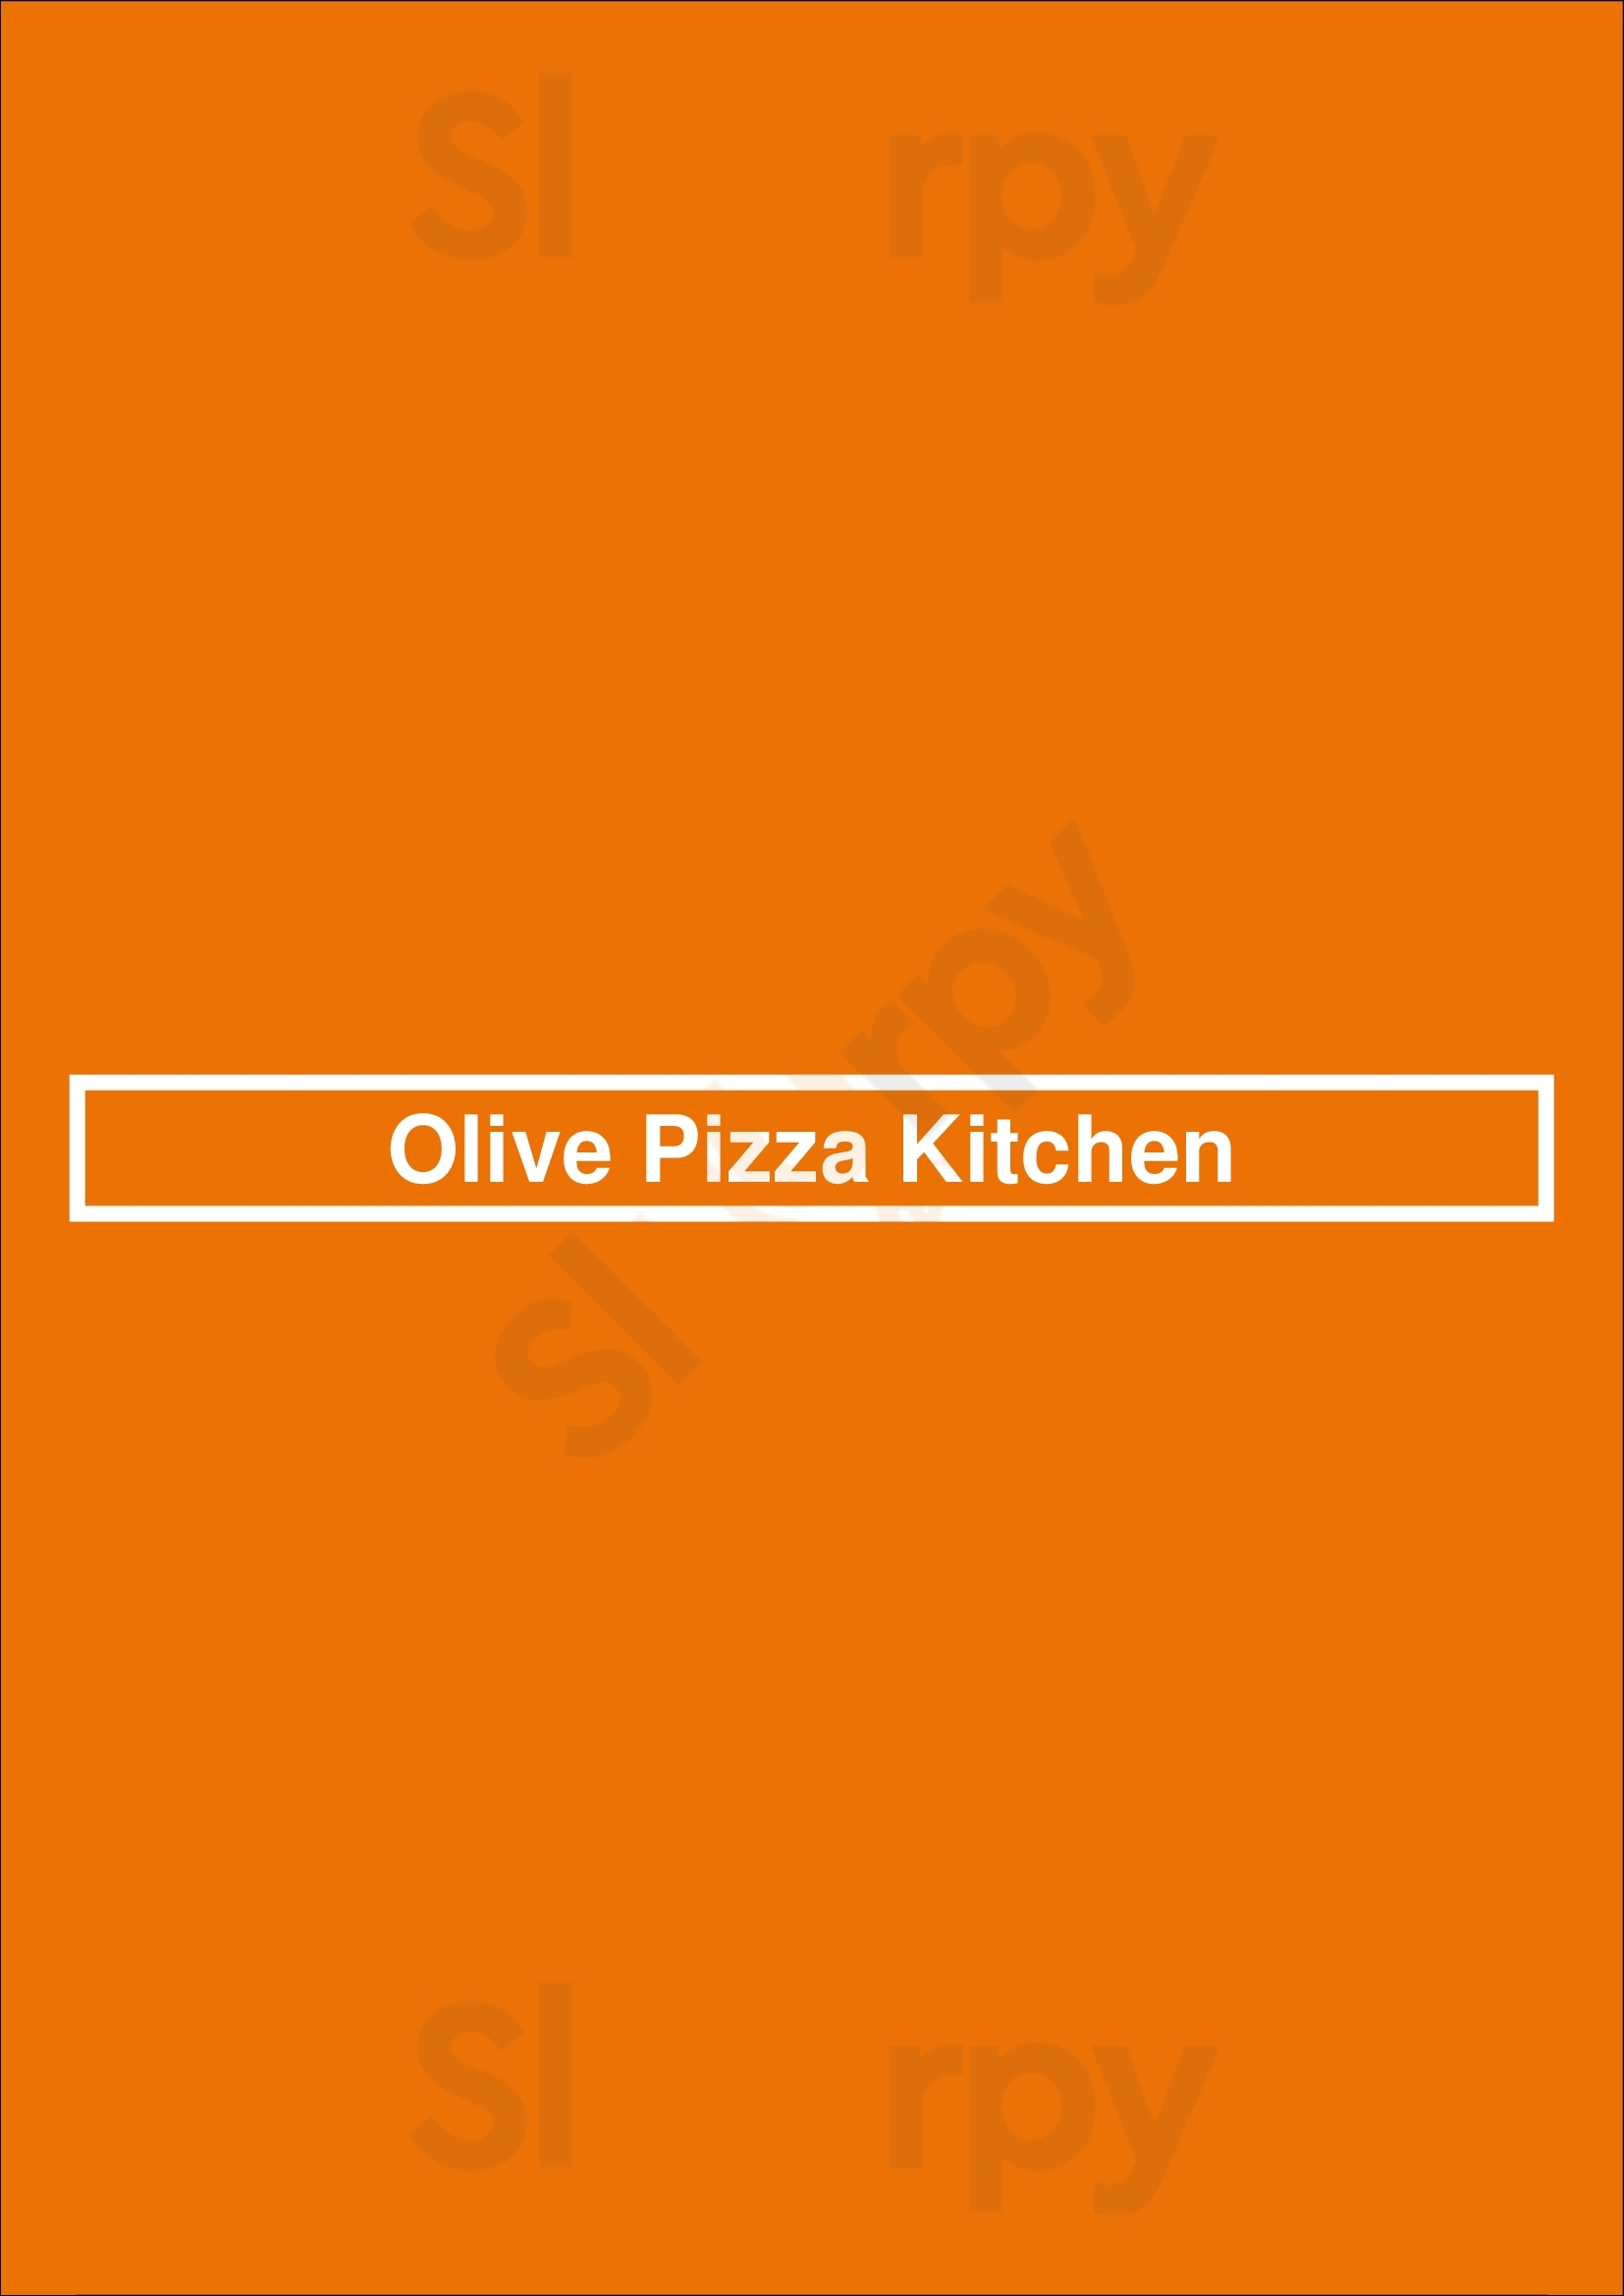 Olive Pizza Kitchen London Menu - 1